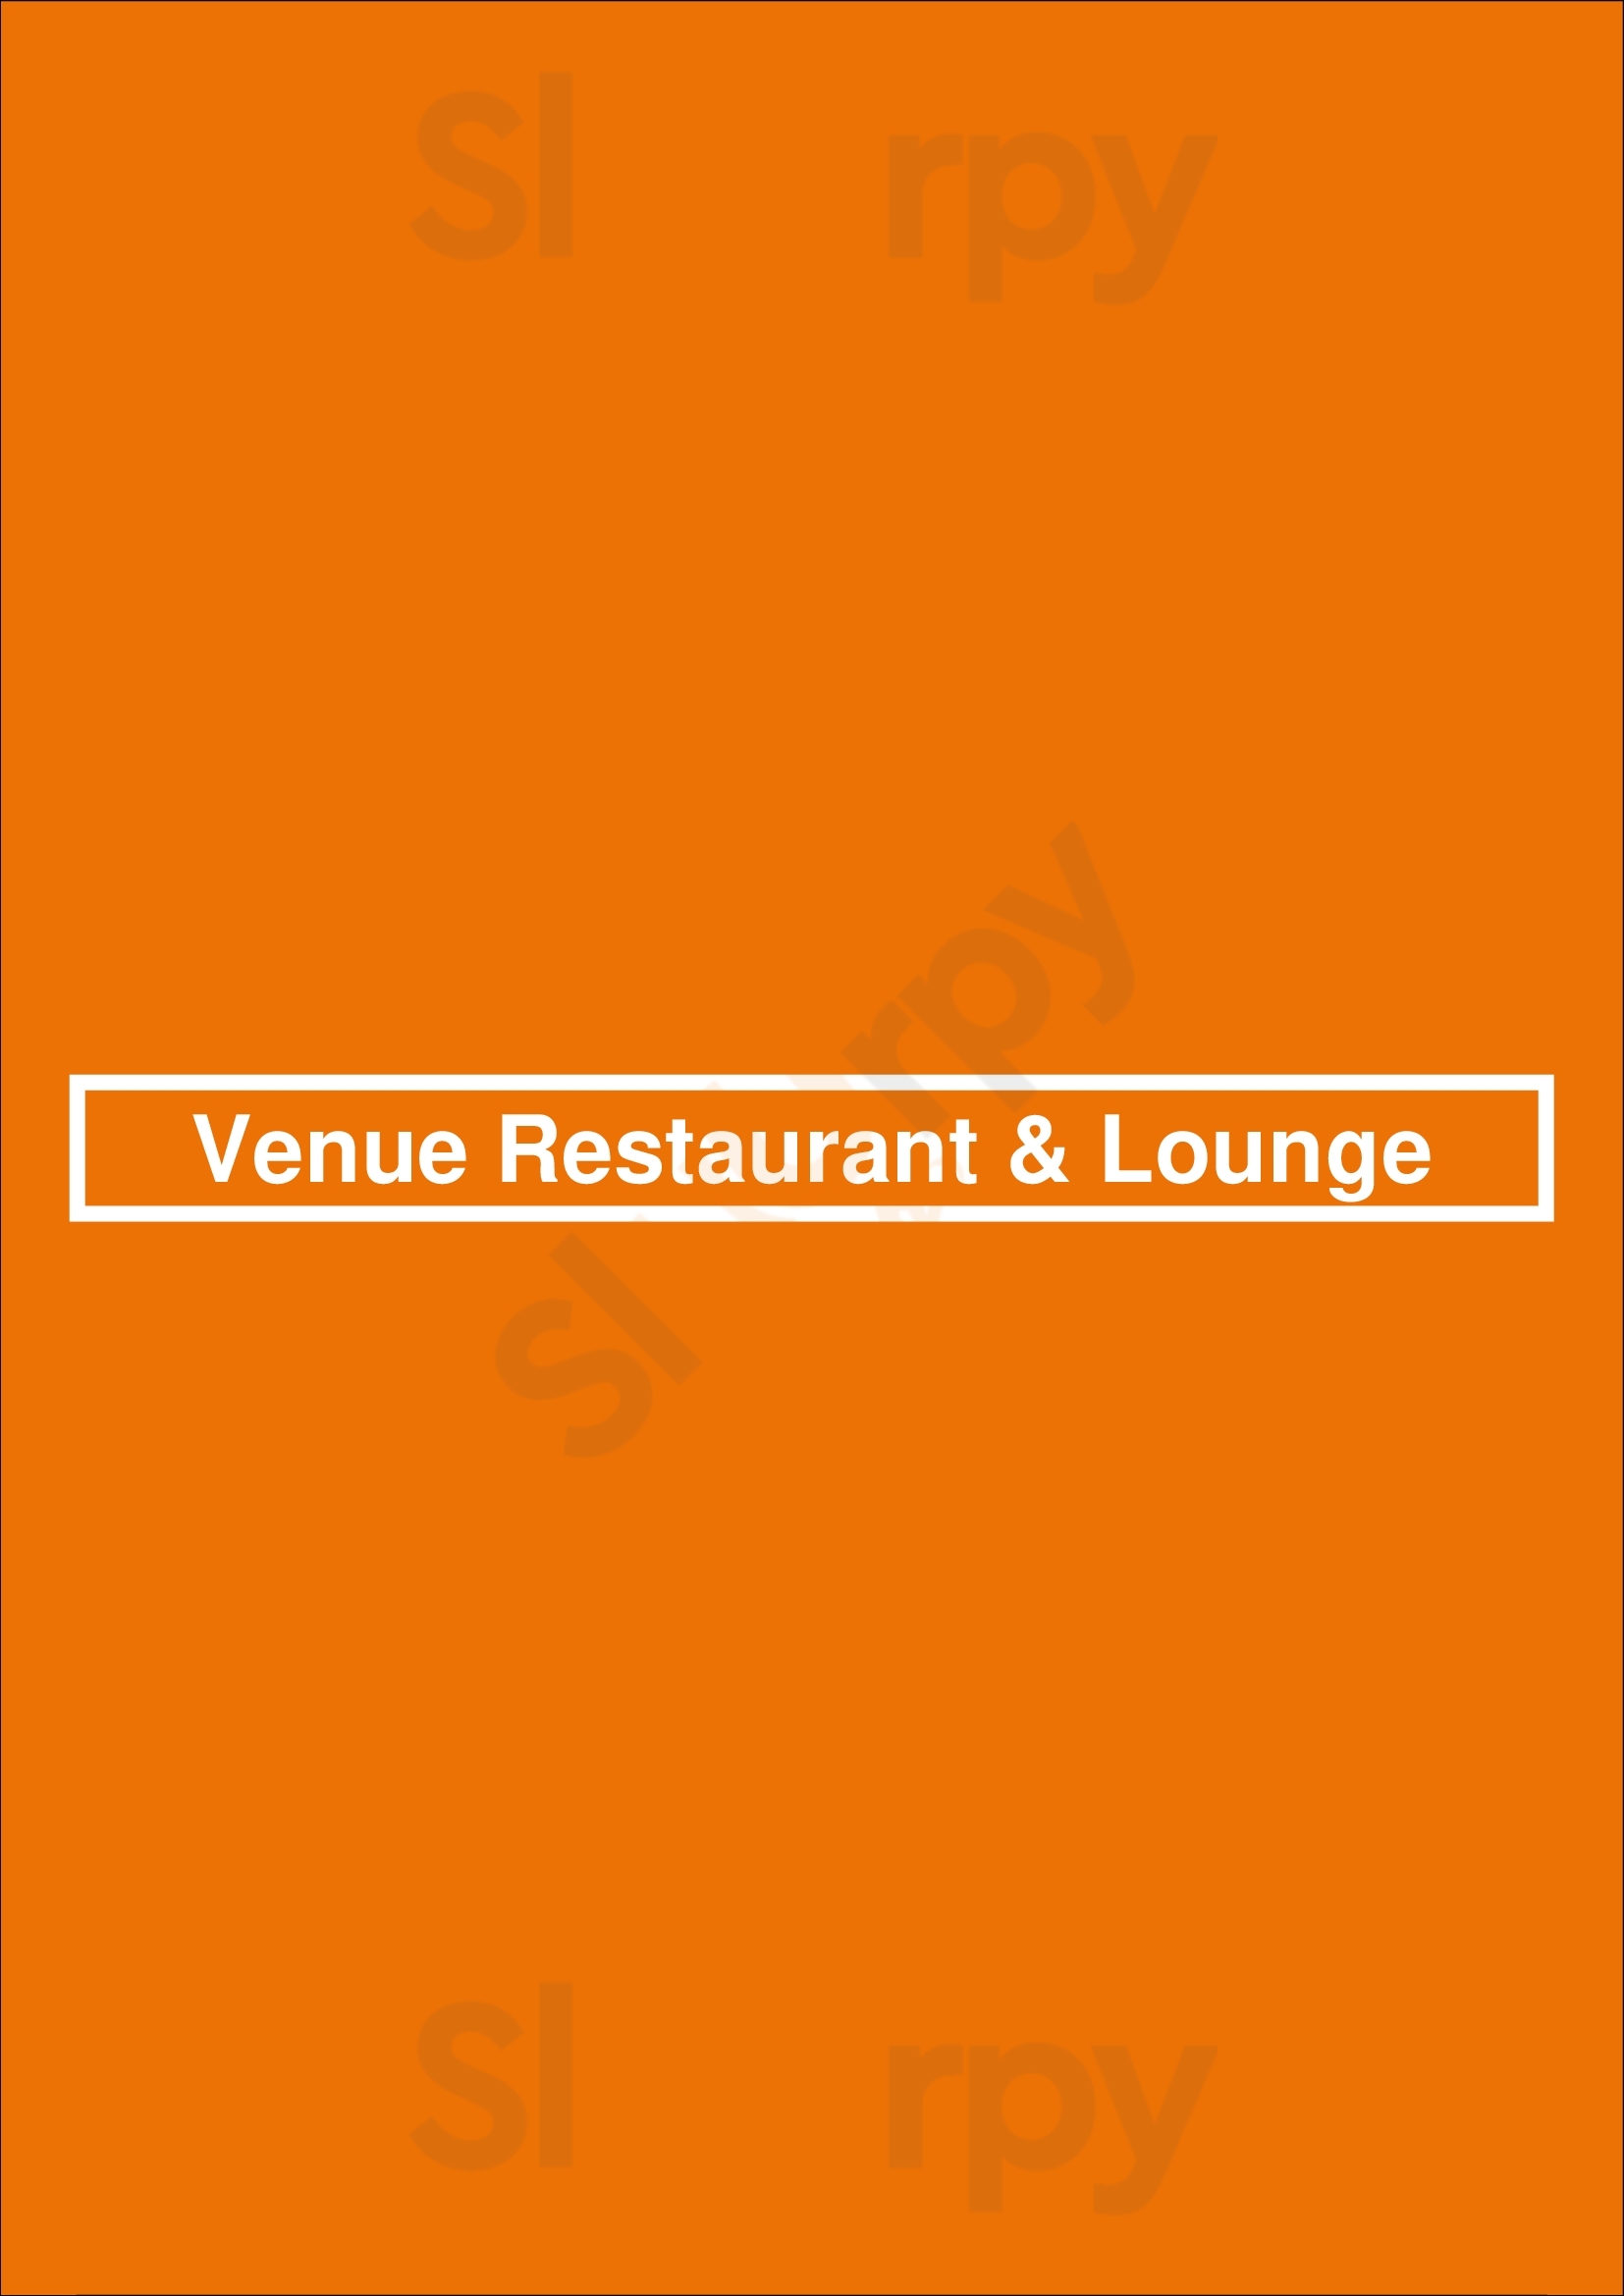 Venue Restaurant & Lounge Lincoln Menu - 1